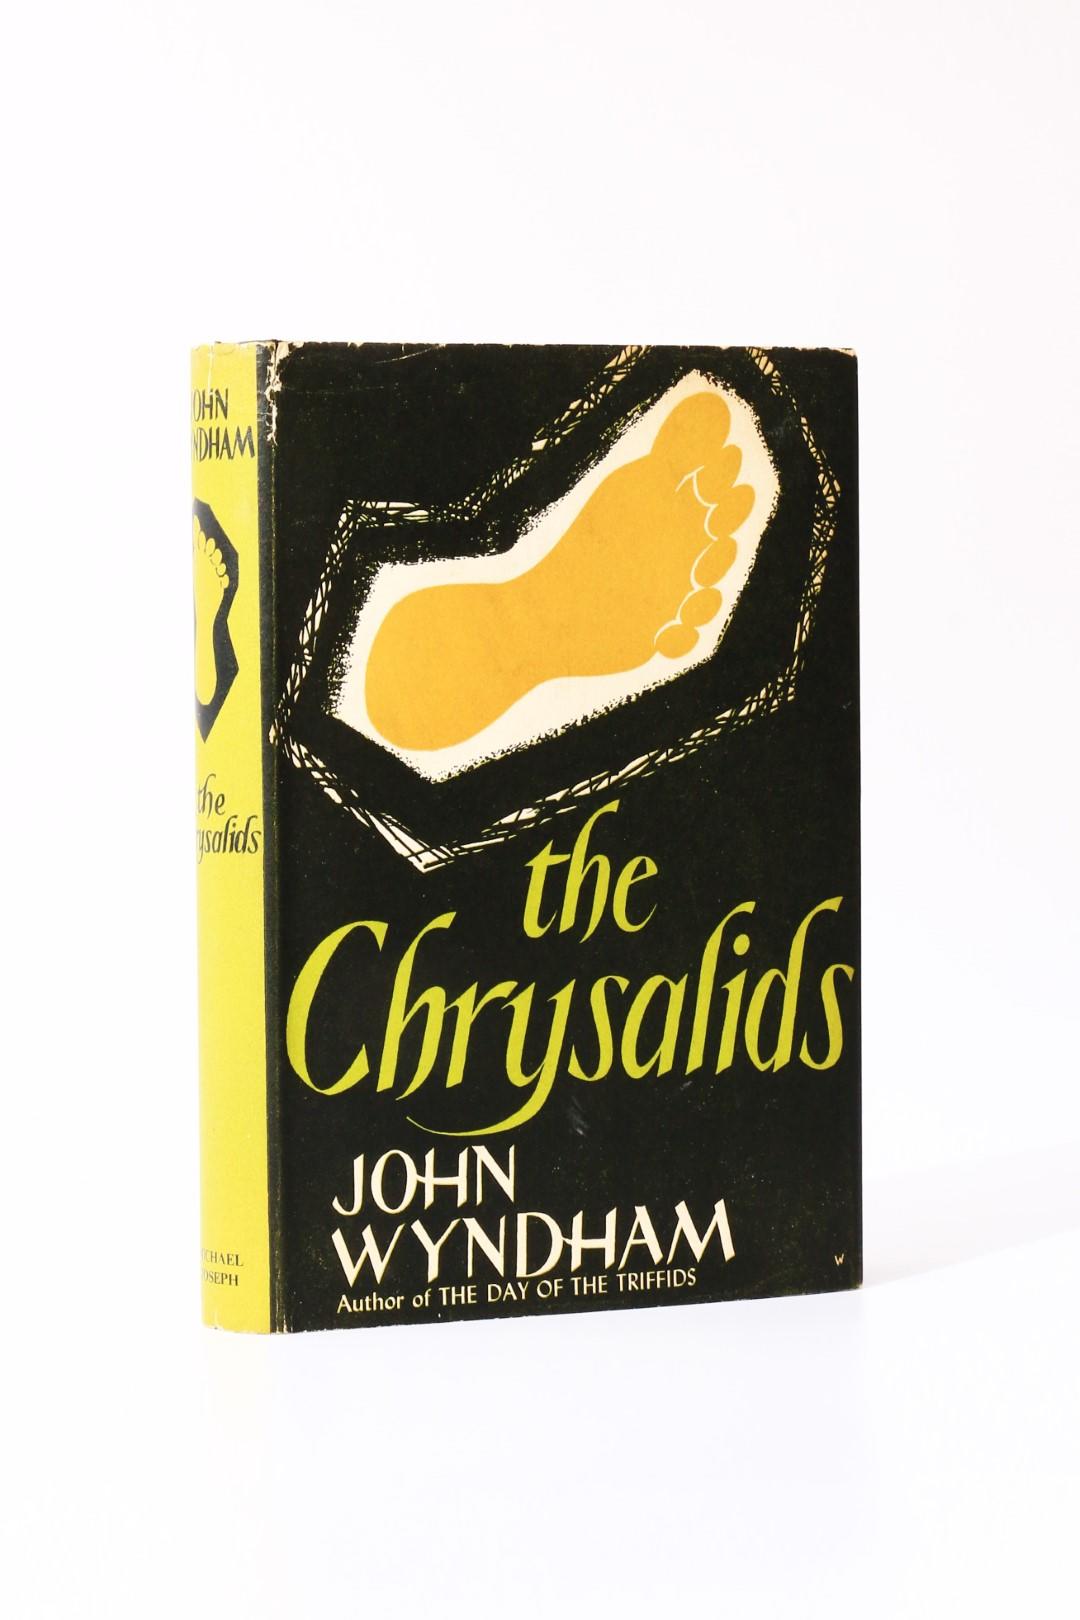 John Wyndham - The Chrysalids - Michael Joseph, 1955, First Edition.